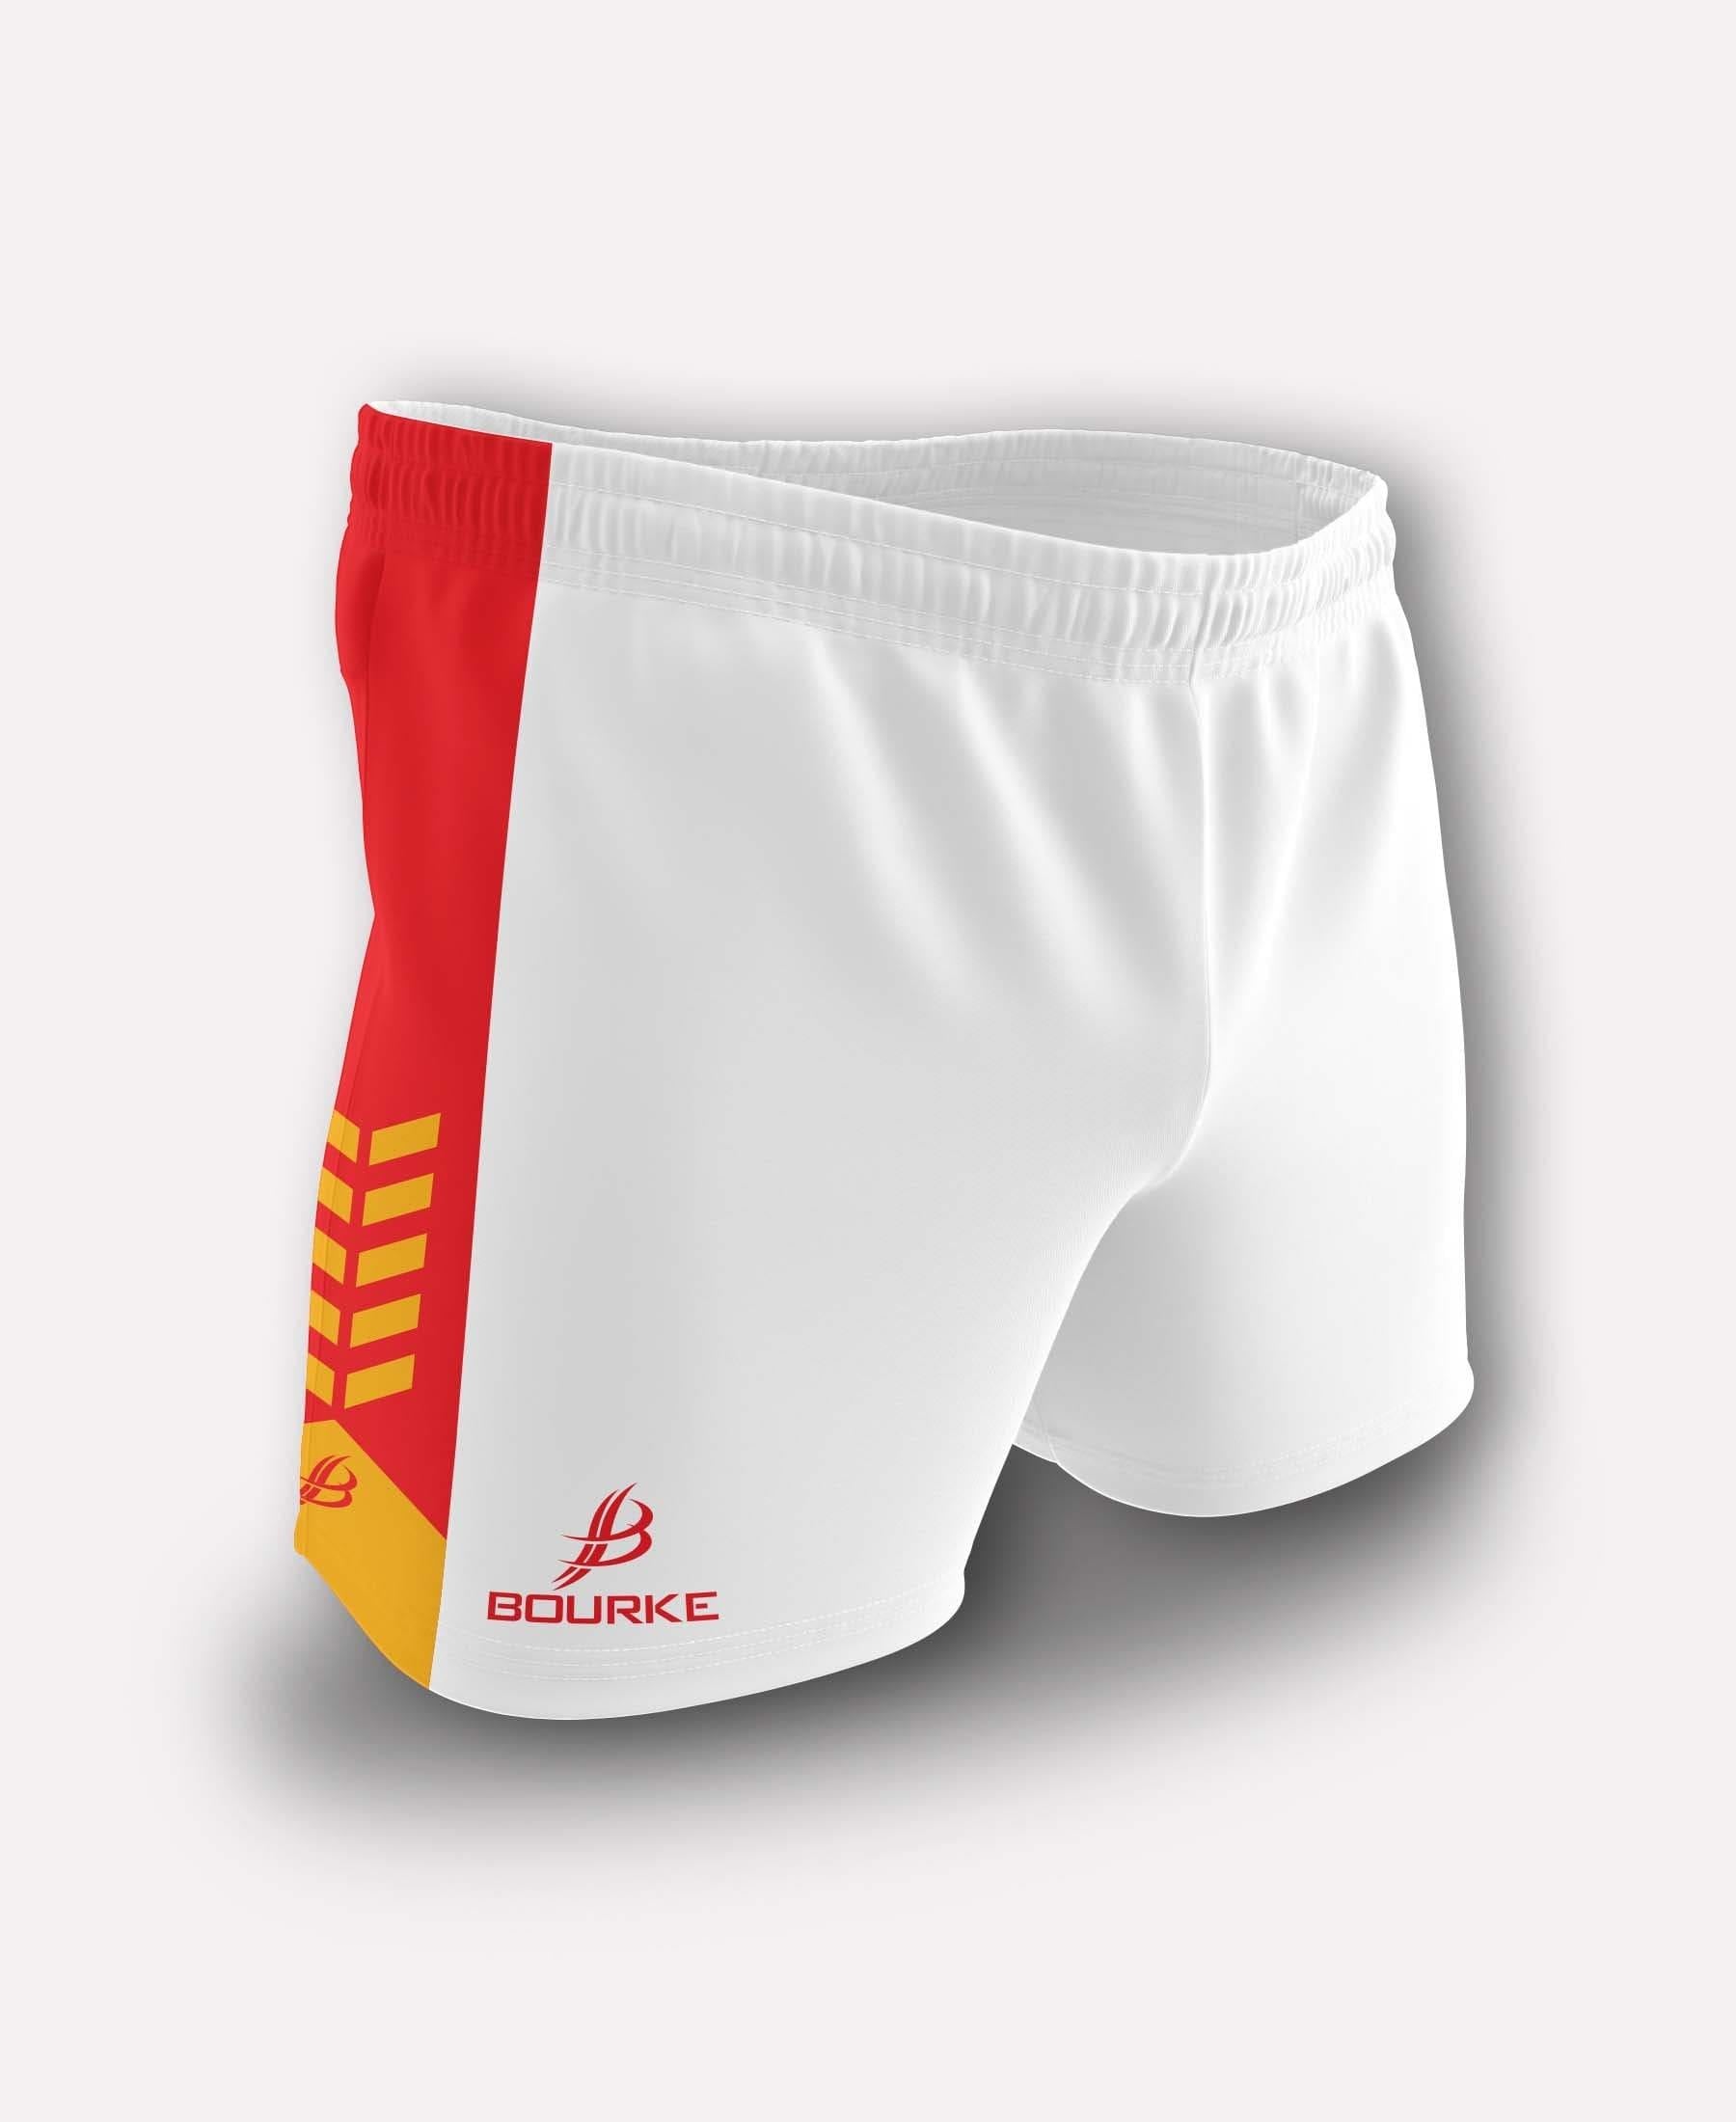 Chevron Kids Shorts (White/Red/Amber) - Bourke Sports Limited